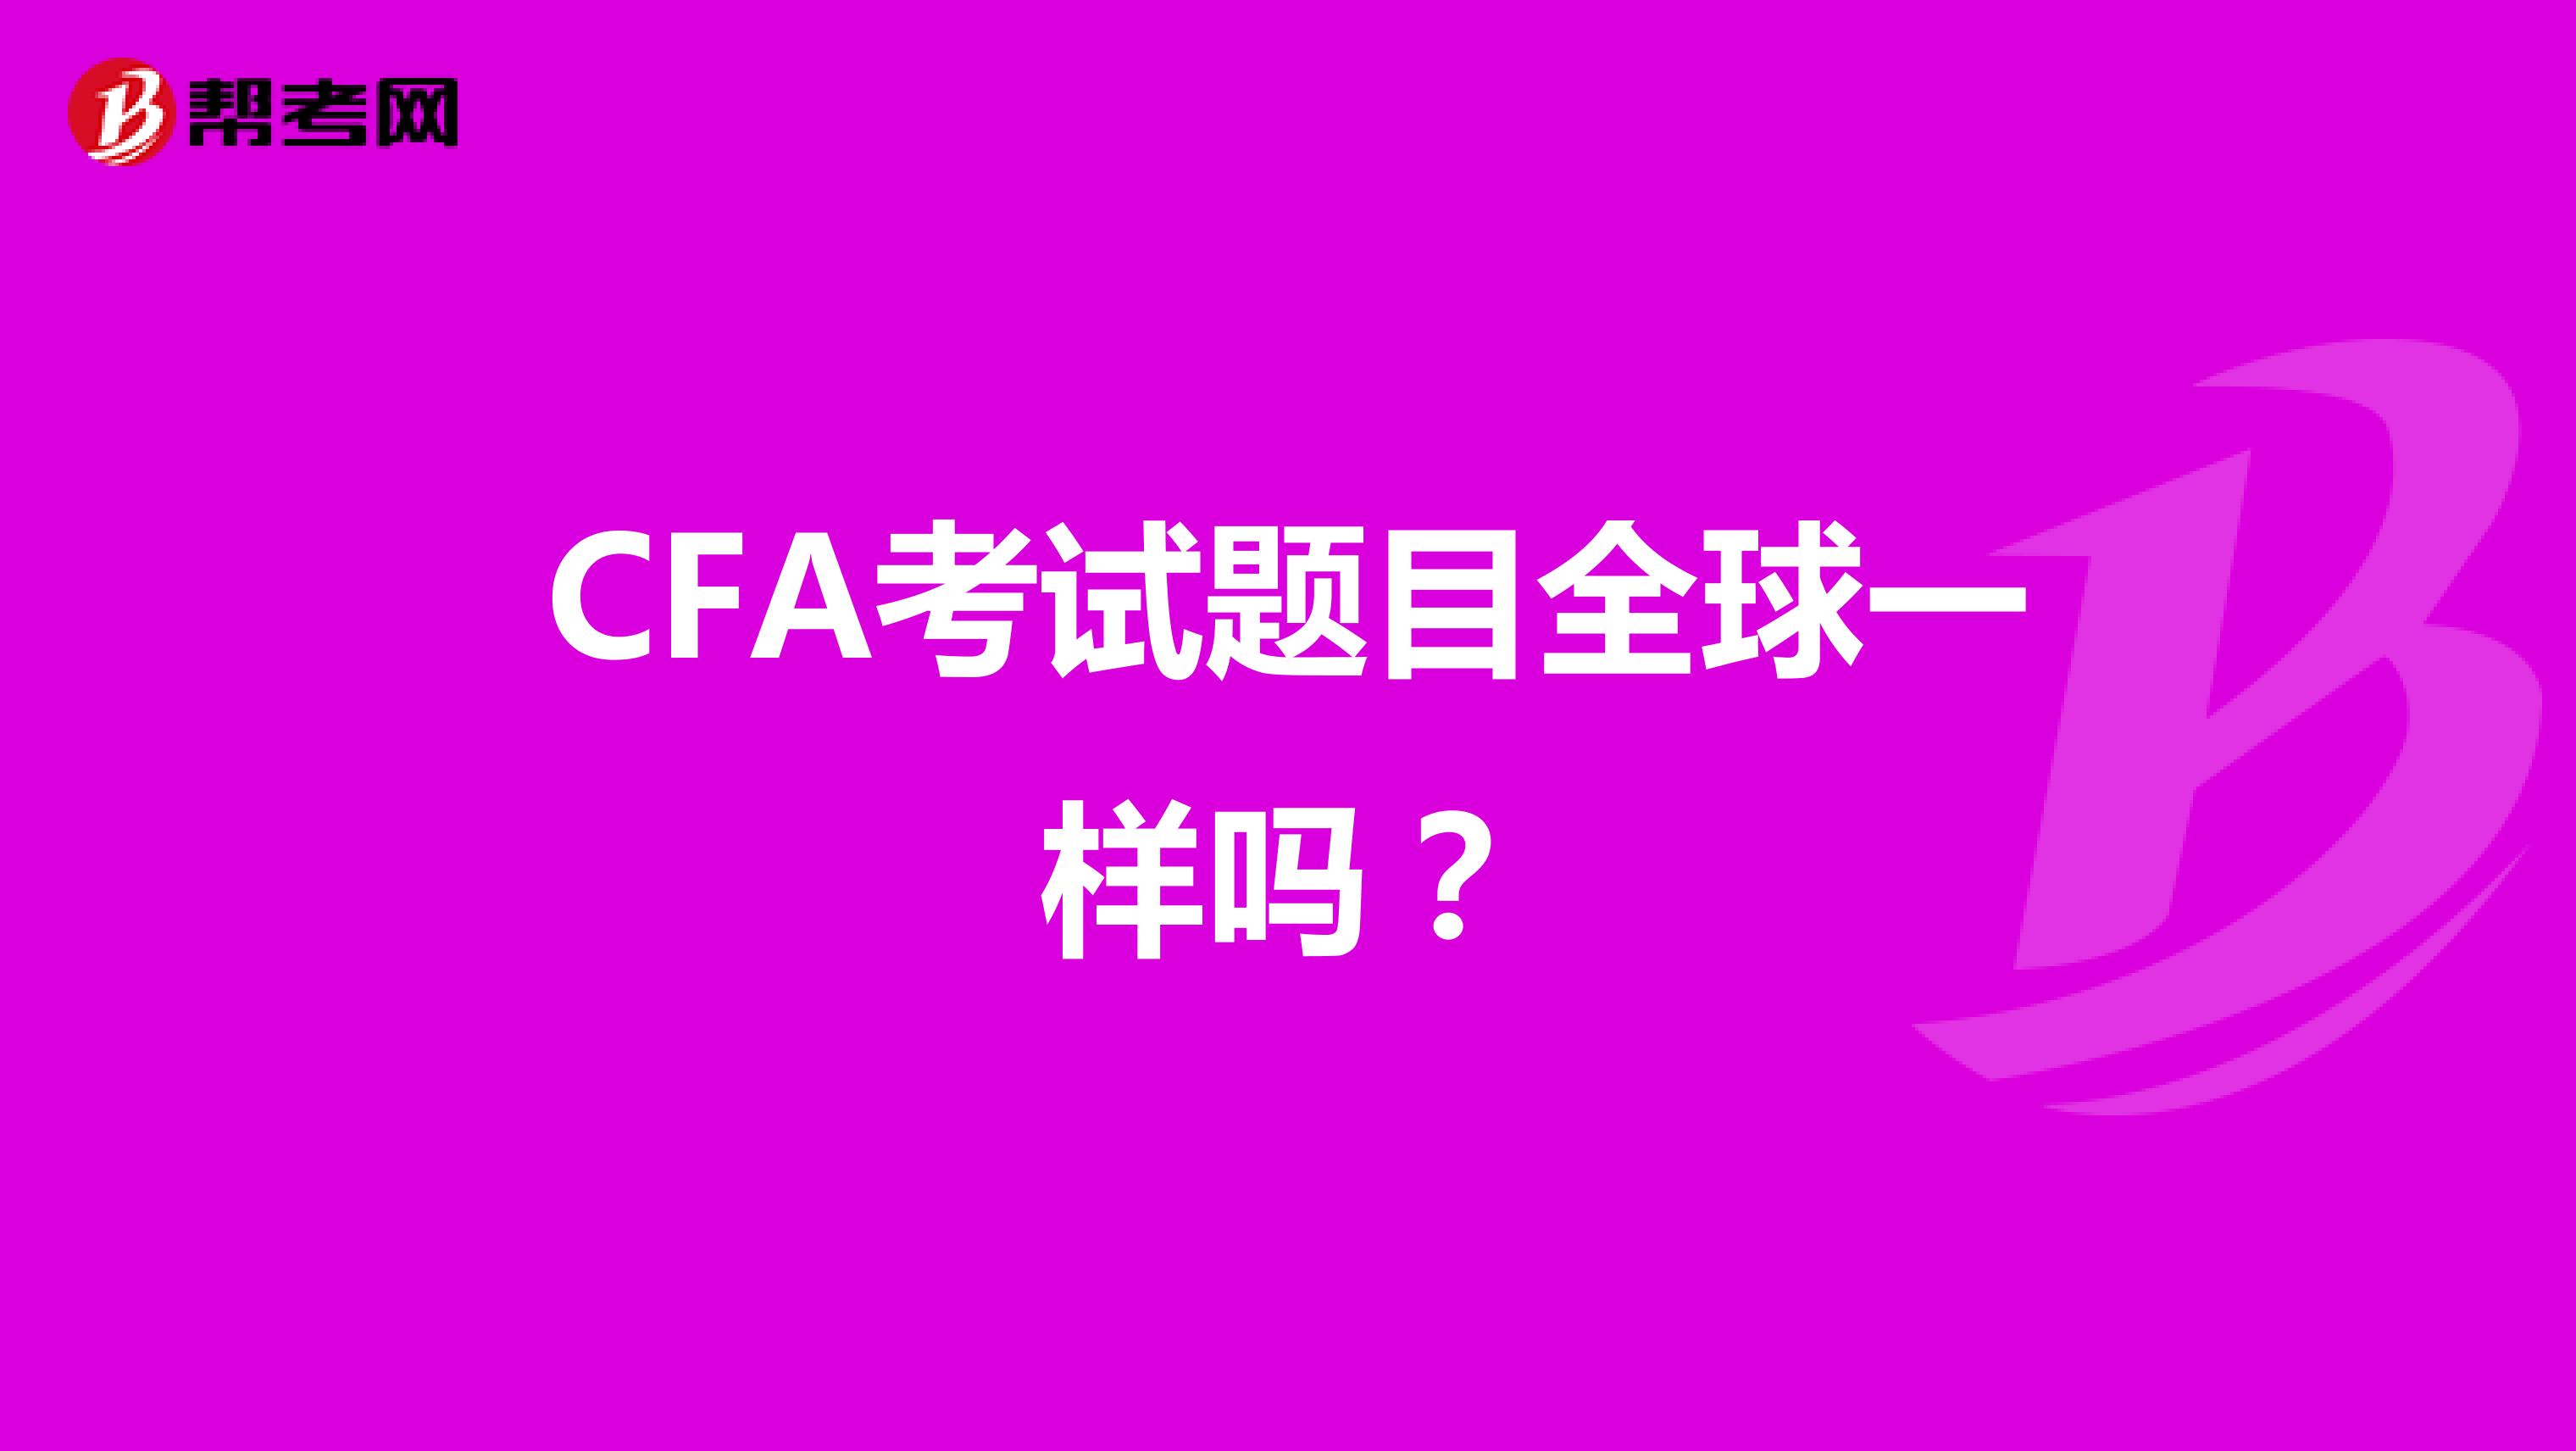 CFA考试题目全球一样吗？